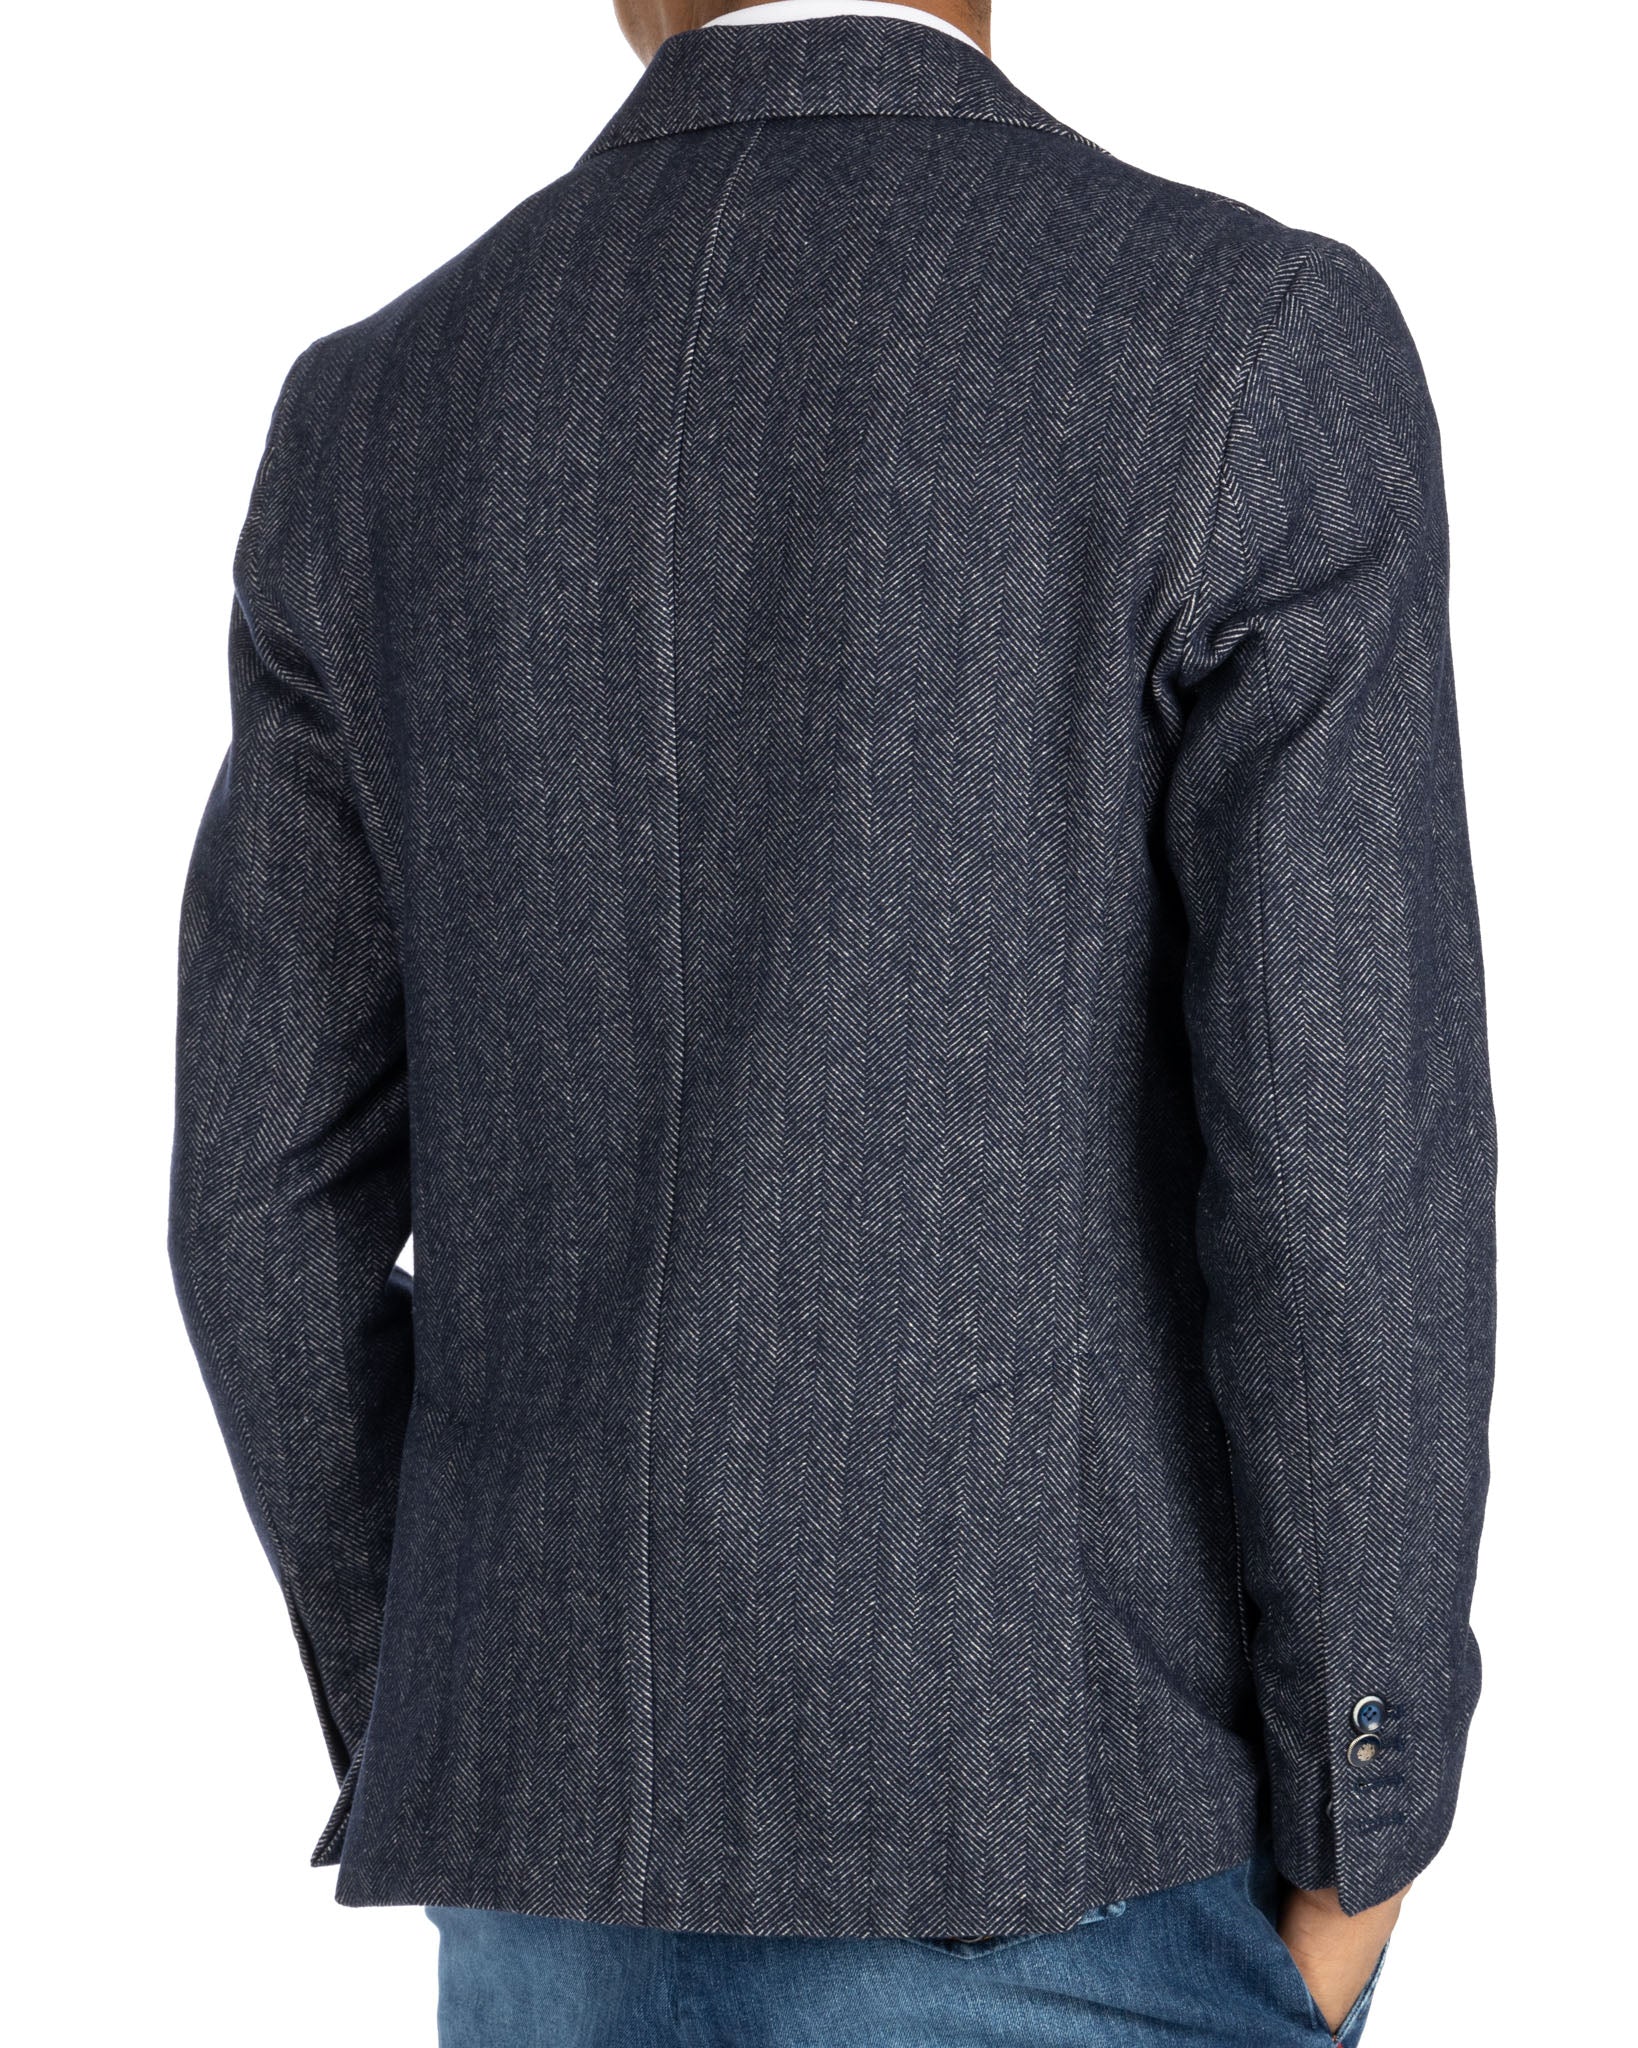 Belluno - blue herringbone weave jacket